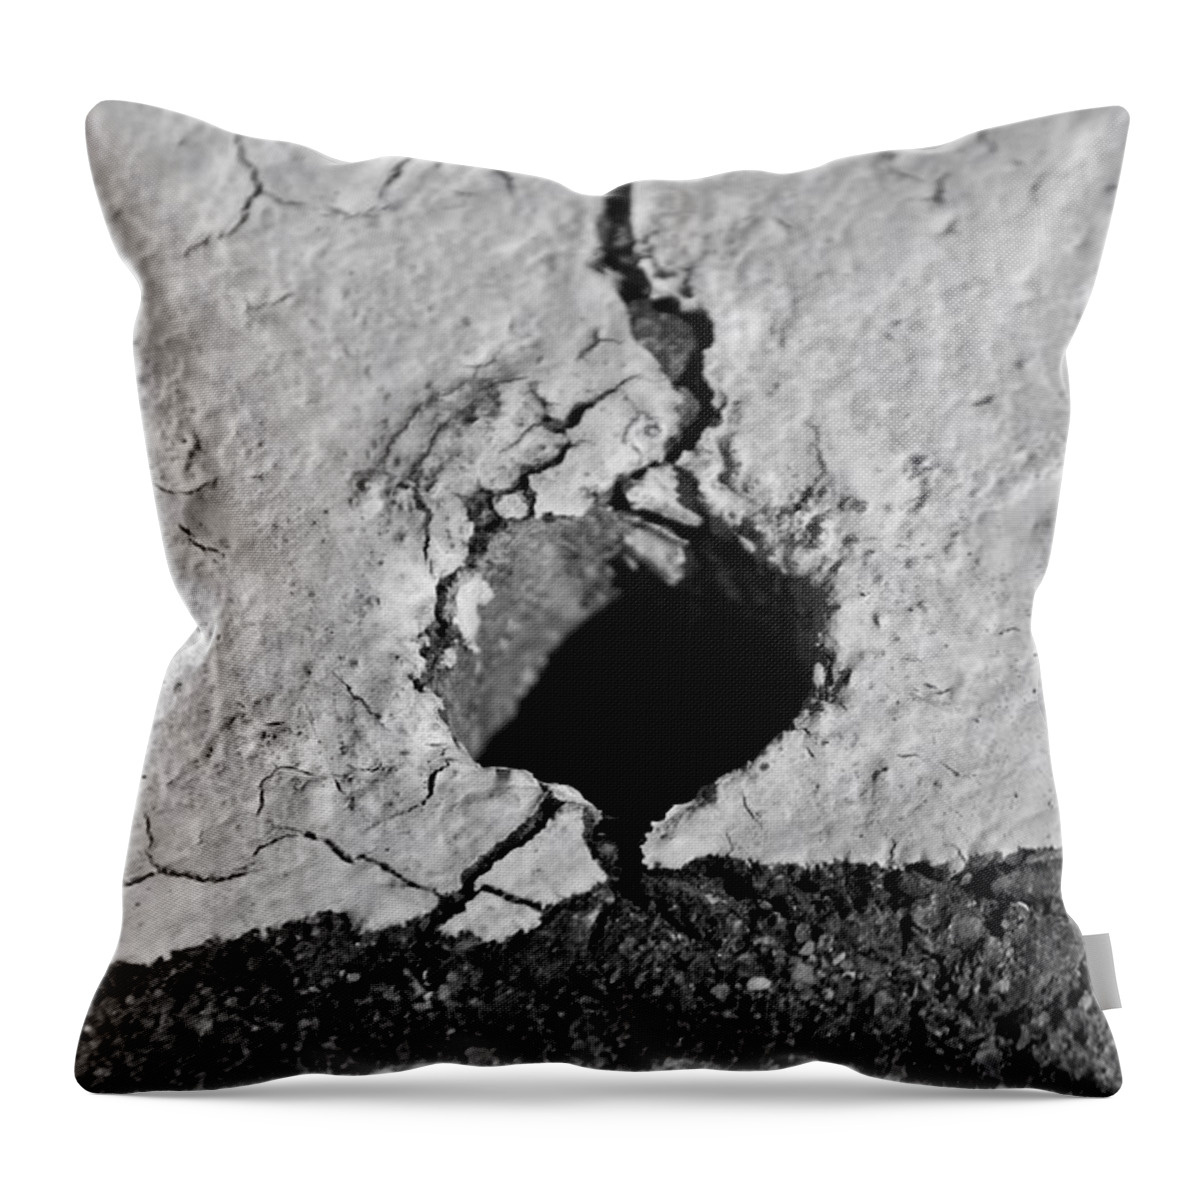 Heart-broken Throw Pillow featuring the photograph Heart Shadow 2 by Cynthia Guinn